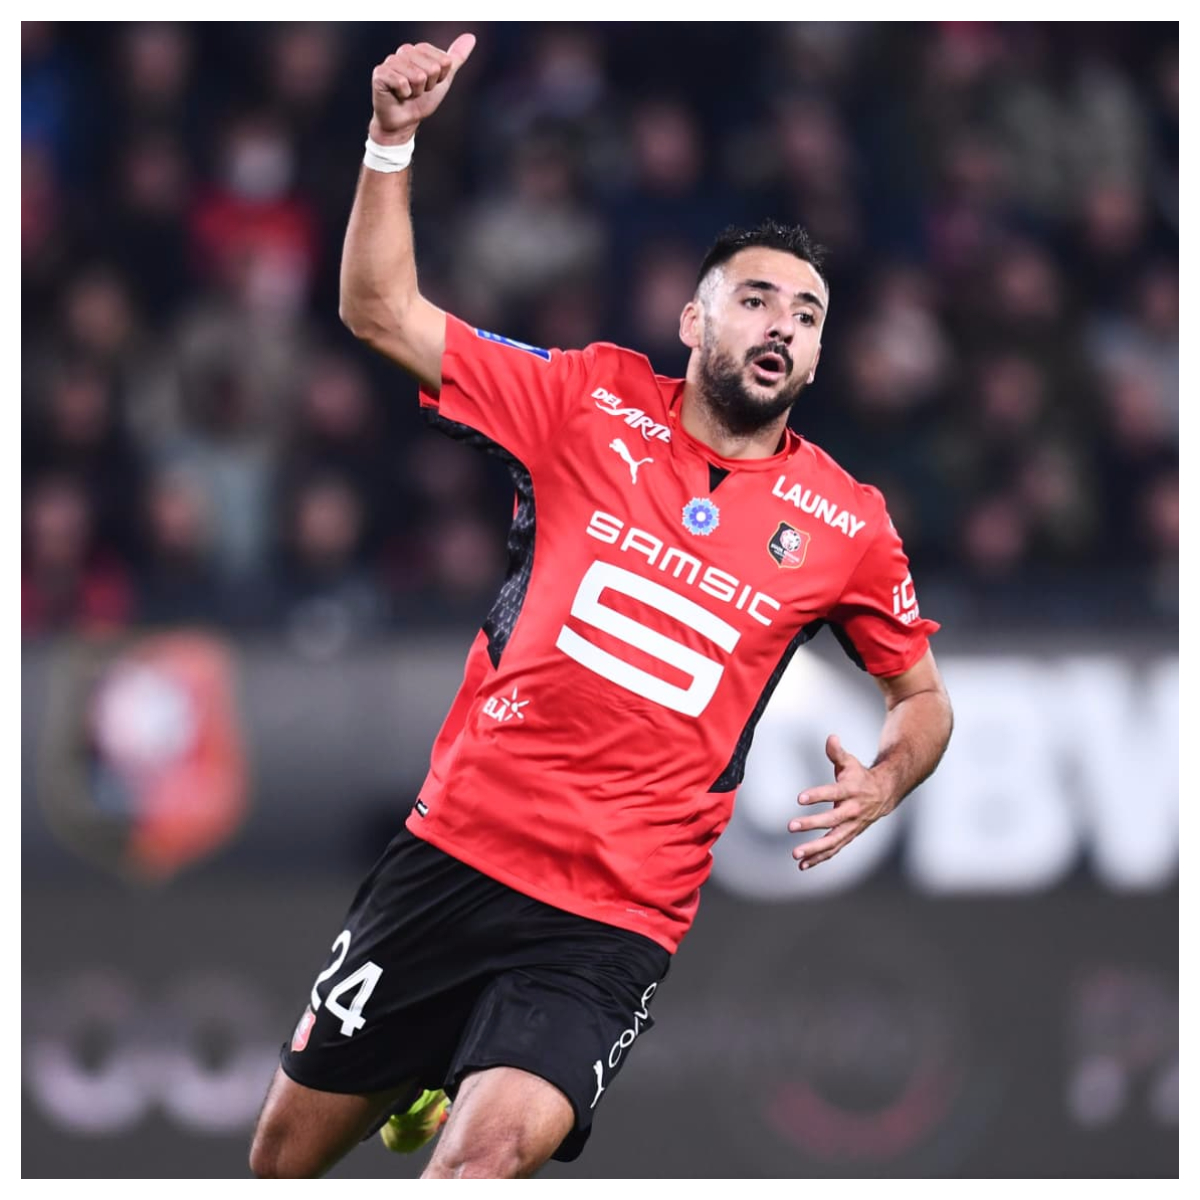 soccer picks Gaetan Laborde Rennes predictions best bet odds